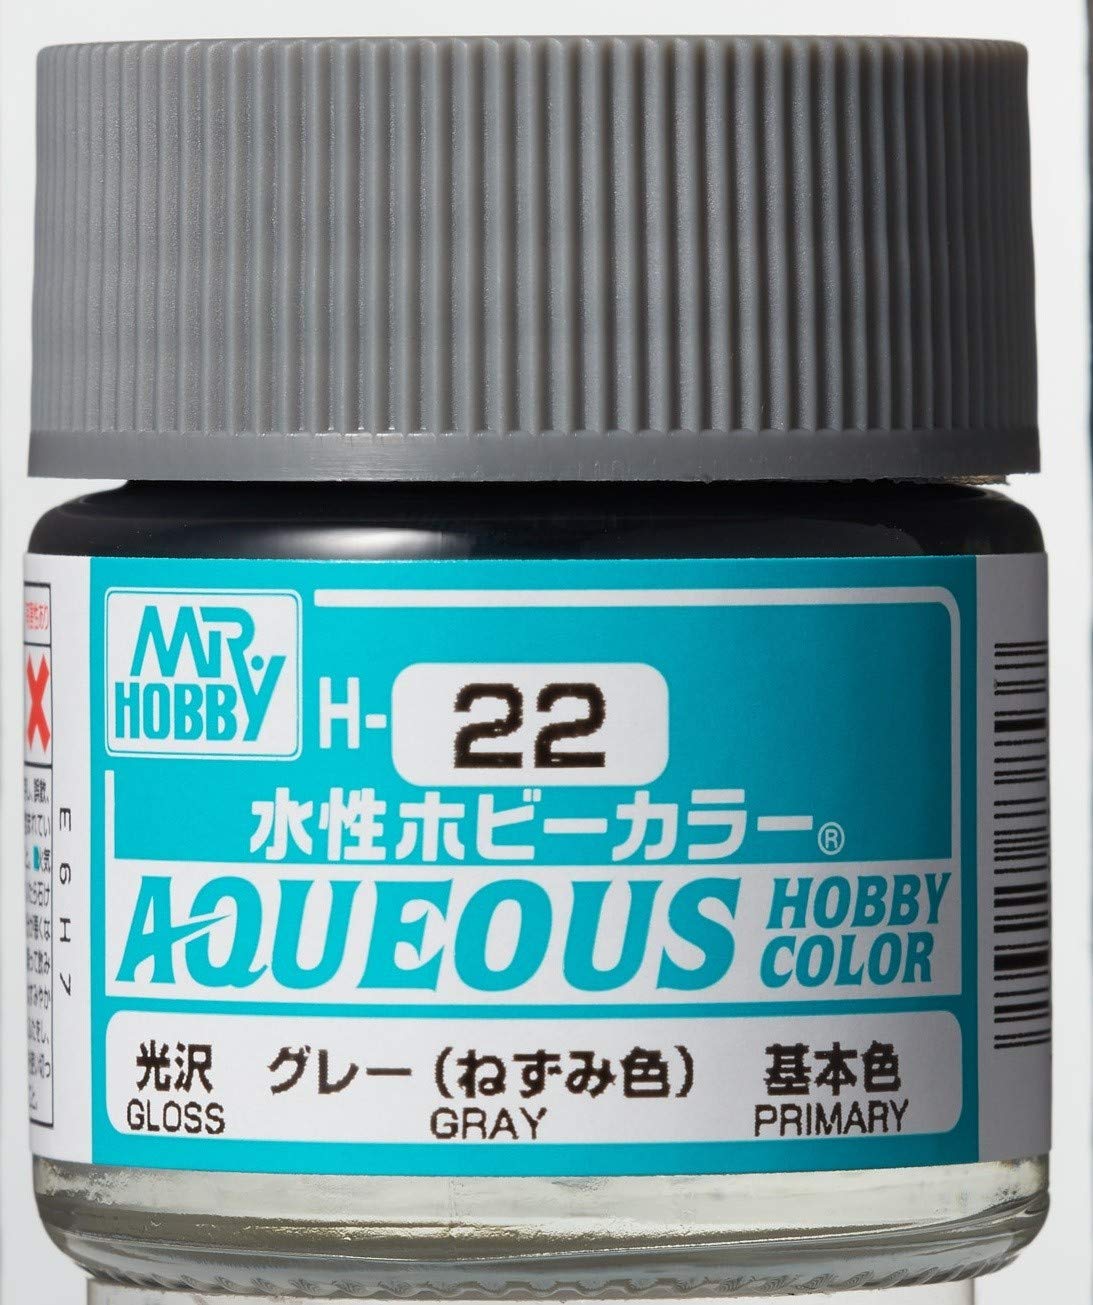 Mr. Hobby Aqueous Hobby Color H22 Gloss Gray 10ml Bottle